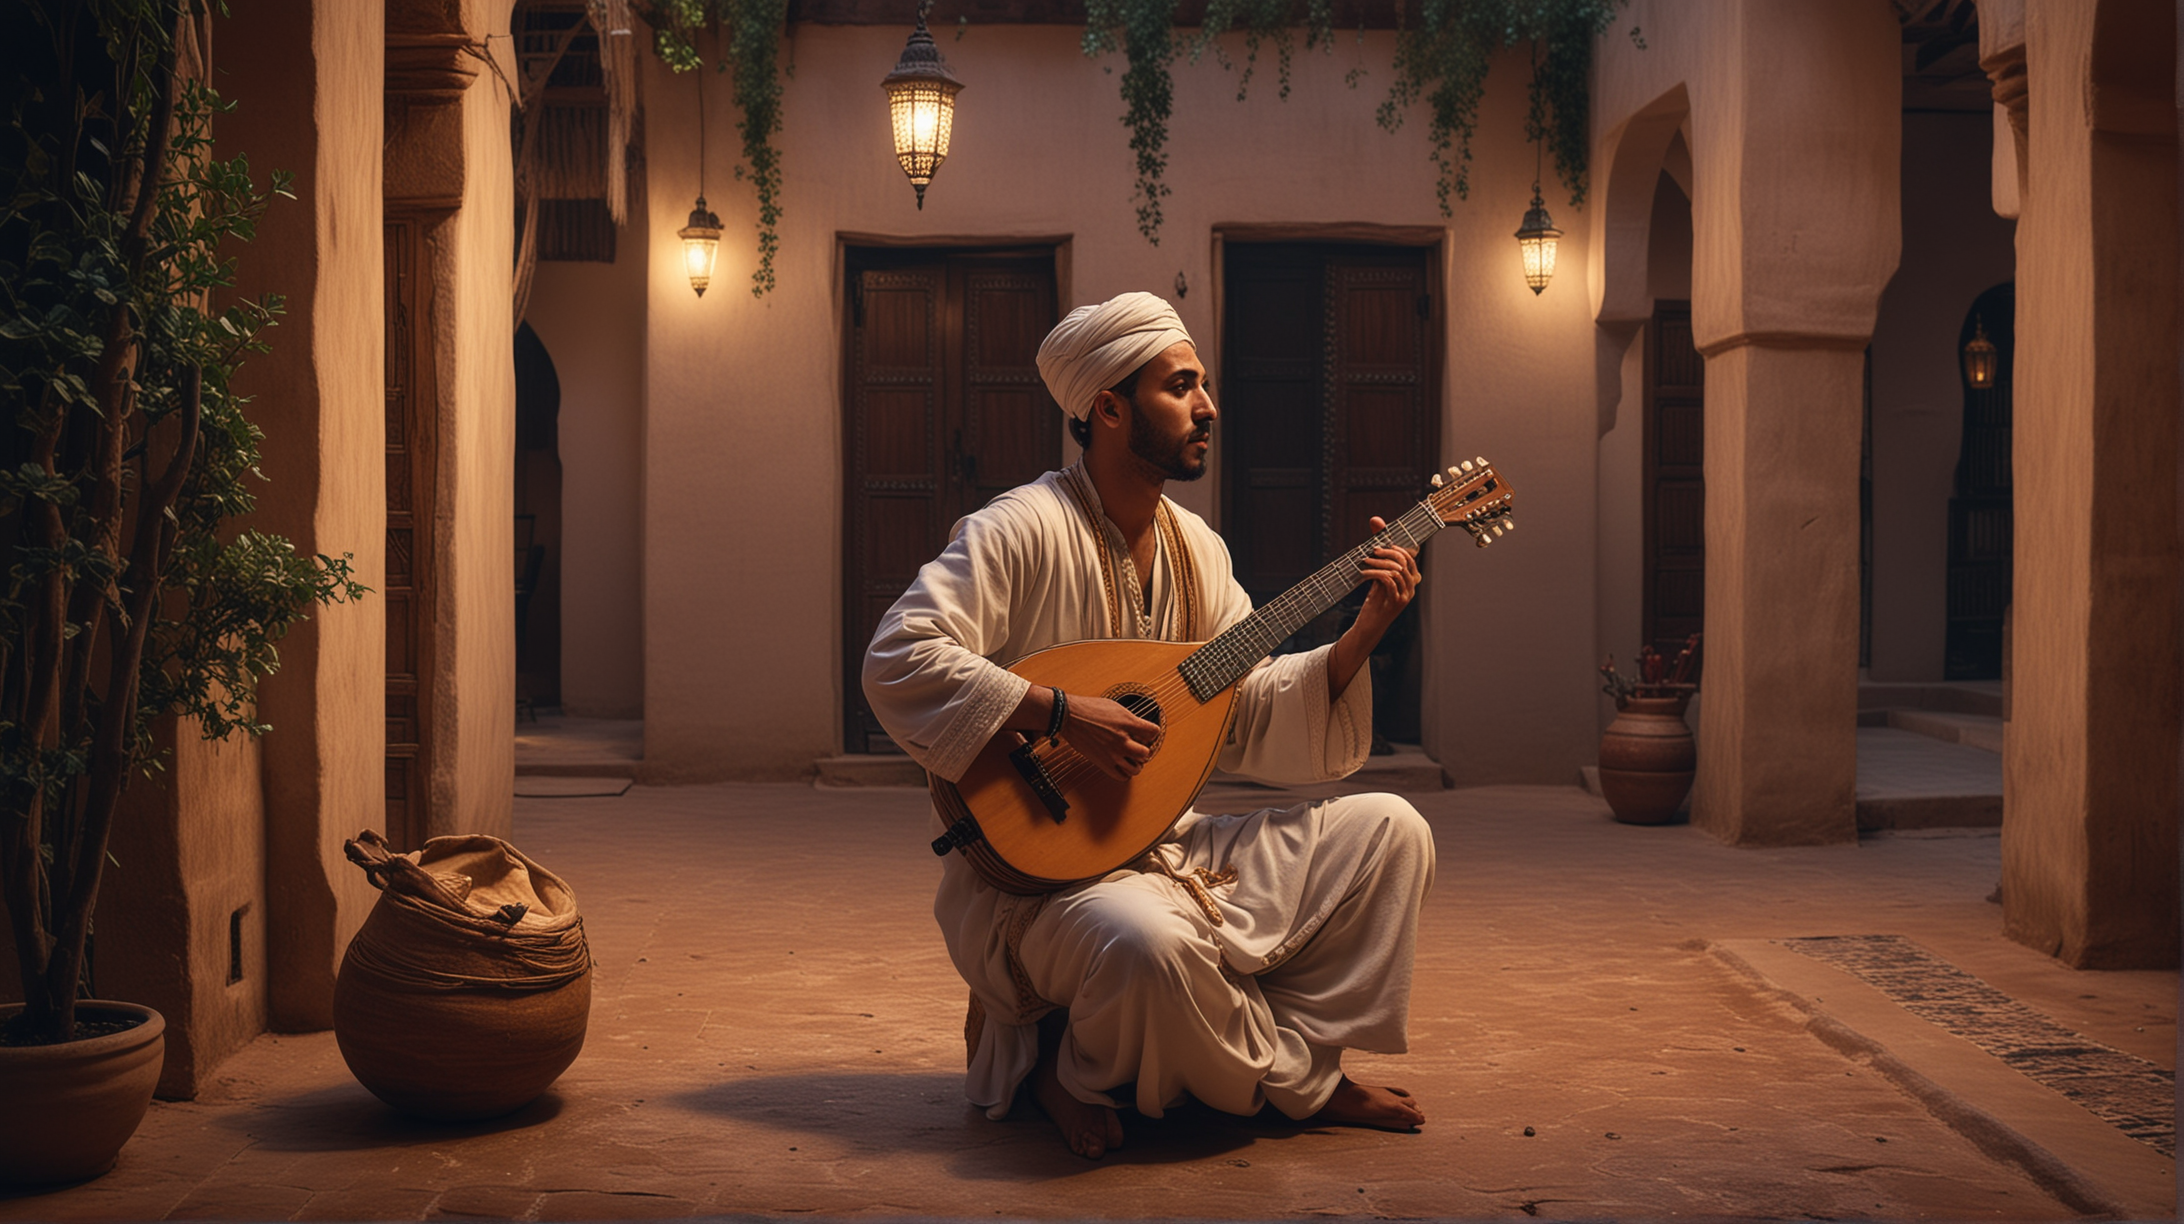 Moroccan Musician Plays Lute in Moonlit Courtyard